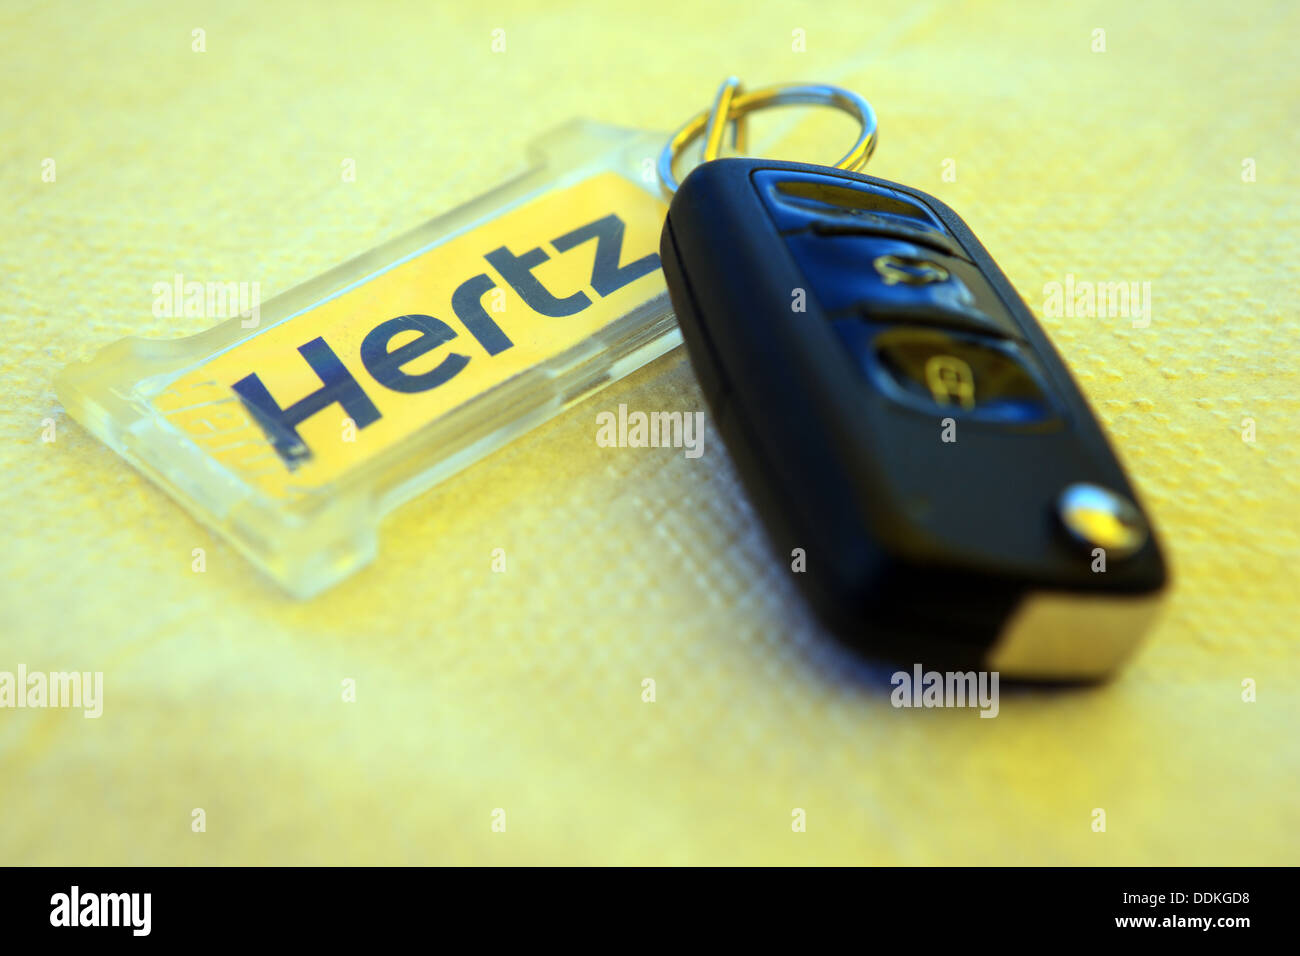 Set of Hertz hire car keys on a yellow background Stock Photo